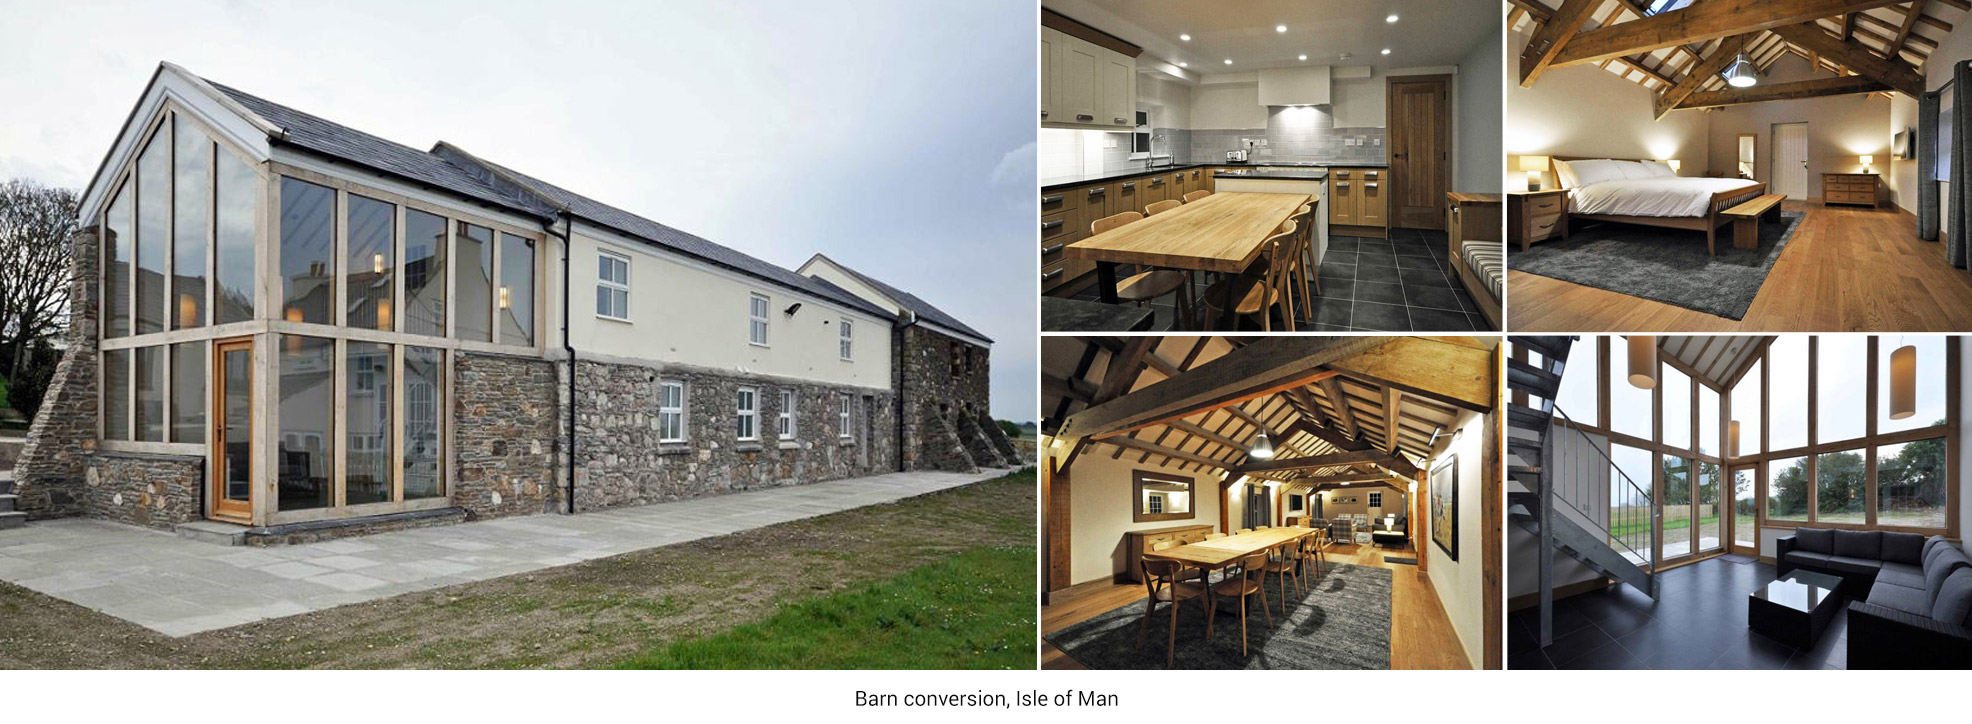 Barn conversion, Isle of Man